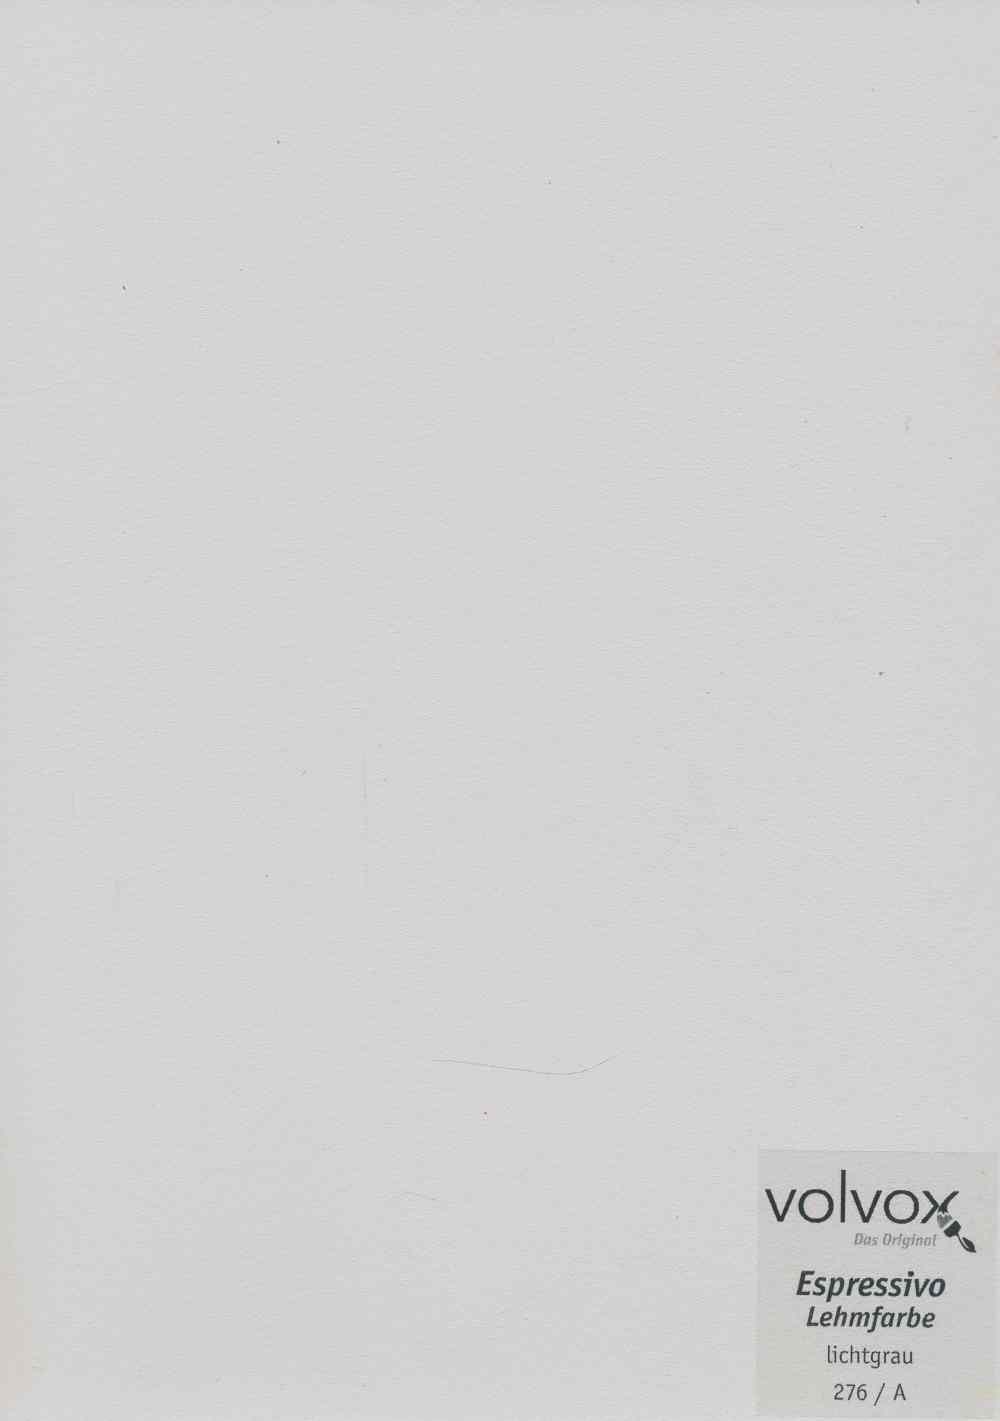 Volvox Espressivo Lehmfarbe 276 lichtgrau